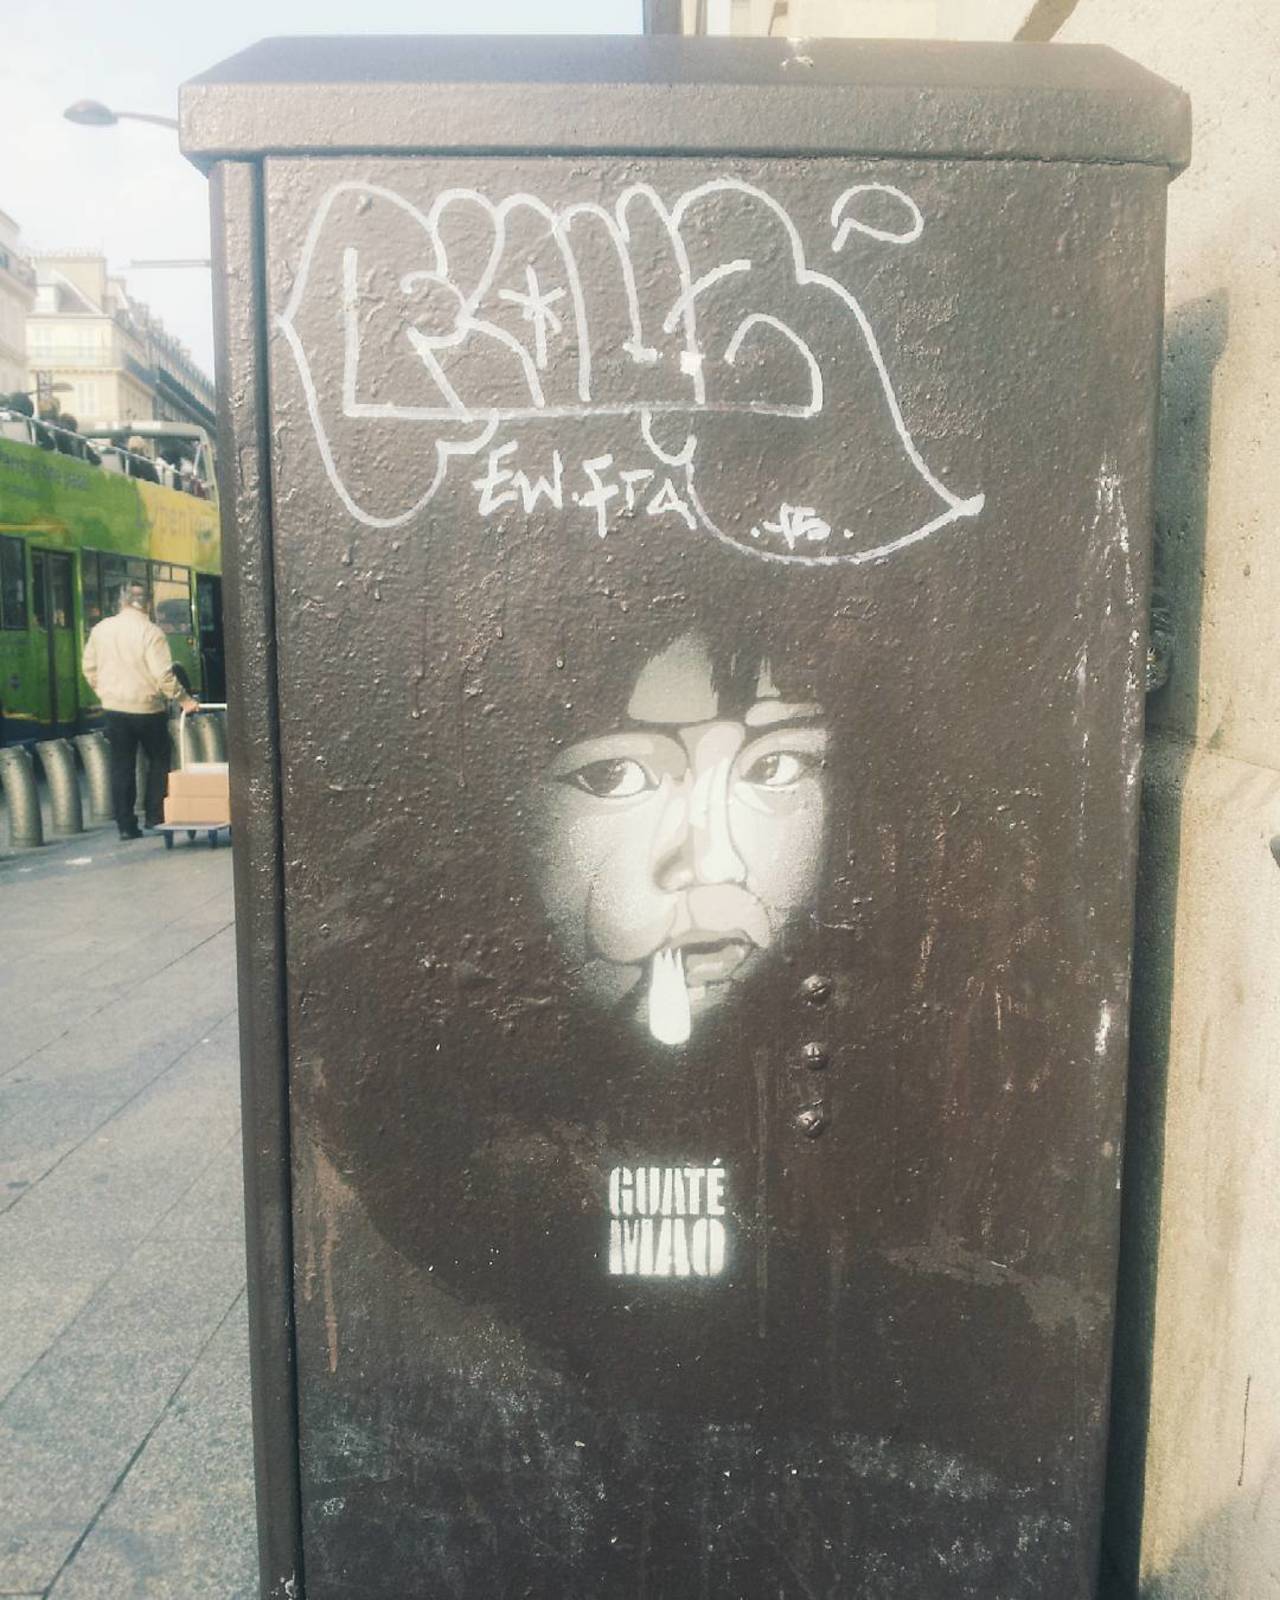 RT @circumjacent_fr: #Paris #graffiti photo by @reneedeneve http://ift.tt/1X9d4Qc #StreetArt http://t.co/hudhsh3DnB